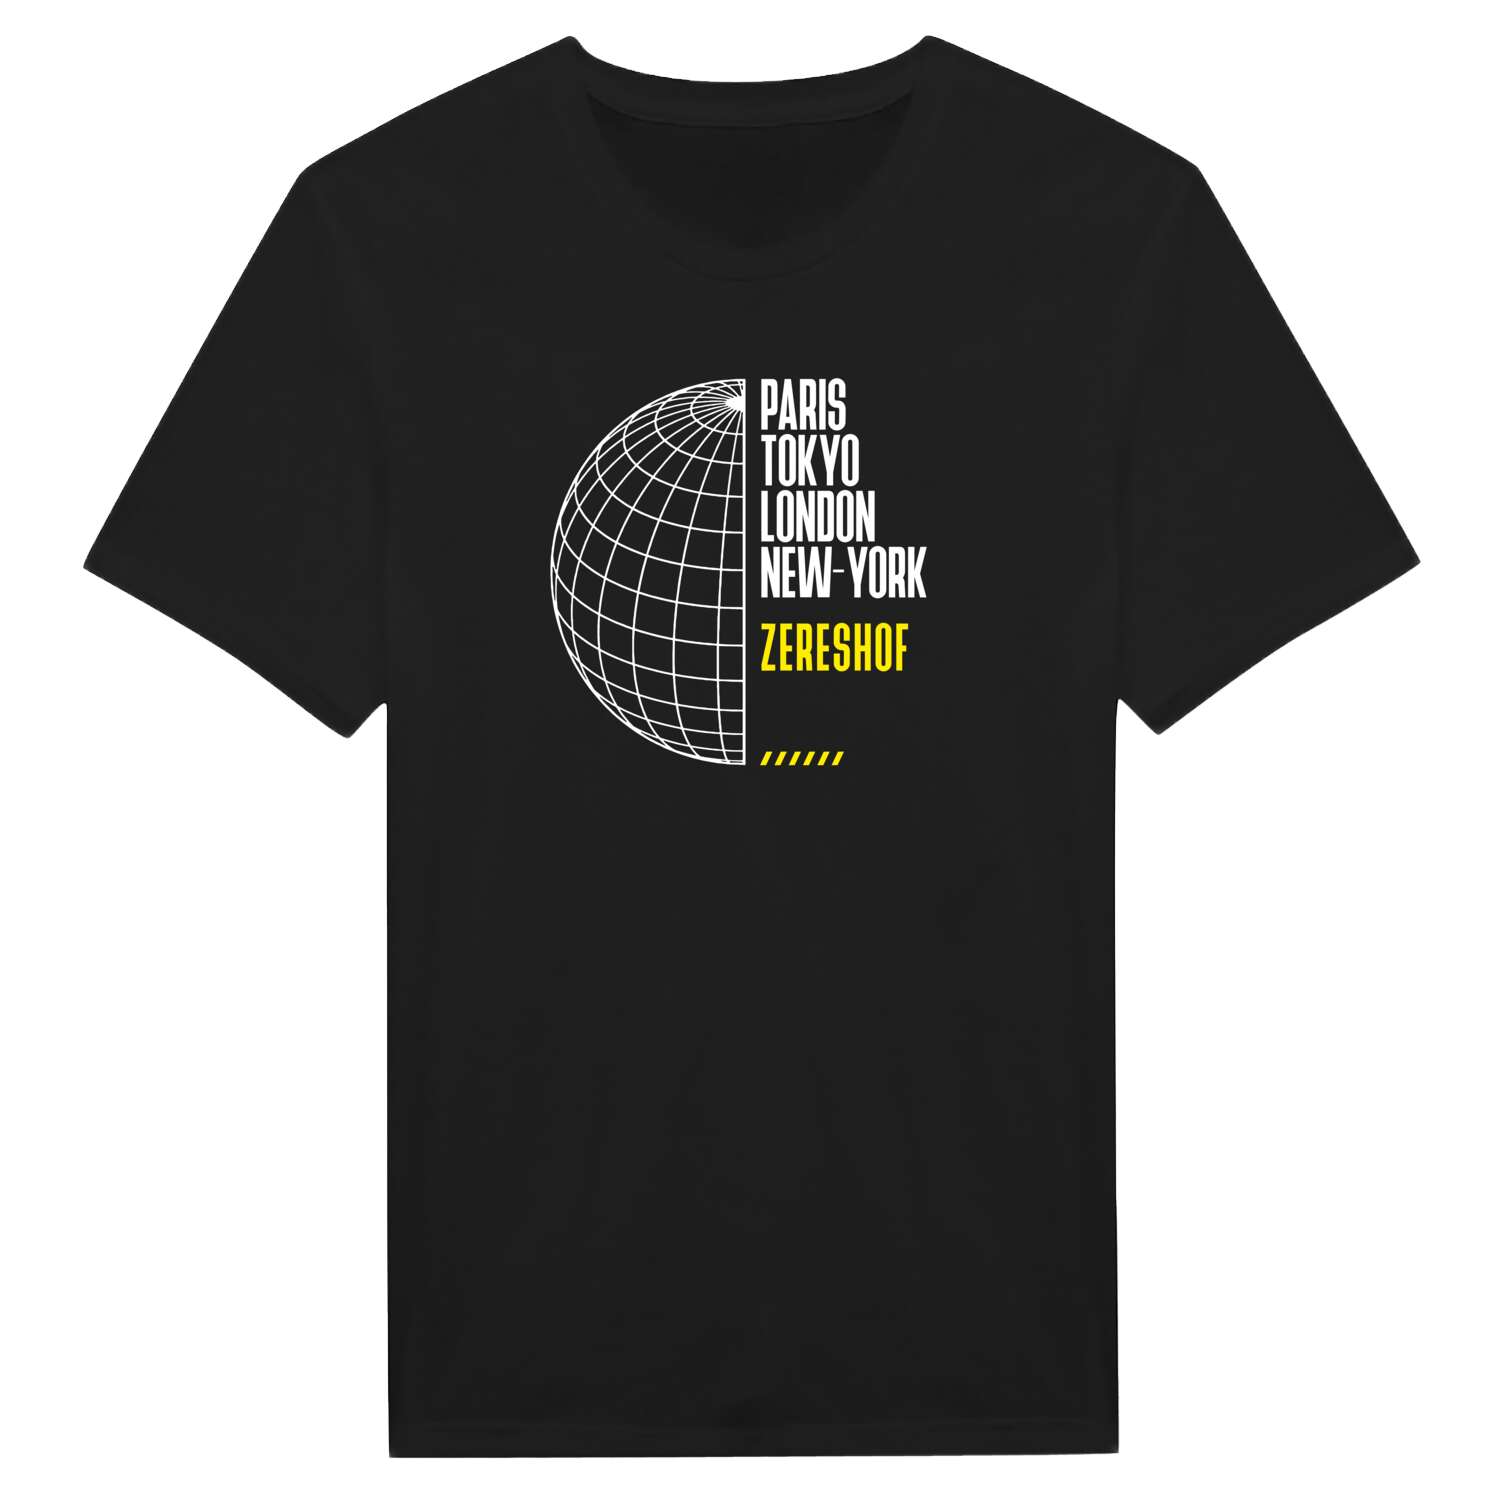 Zereshof T-Shirt »Paris Tokyo London«